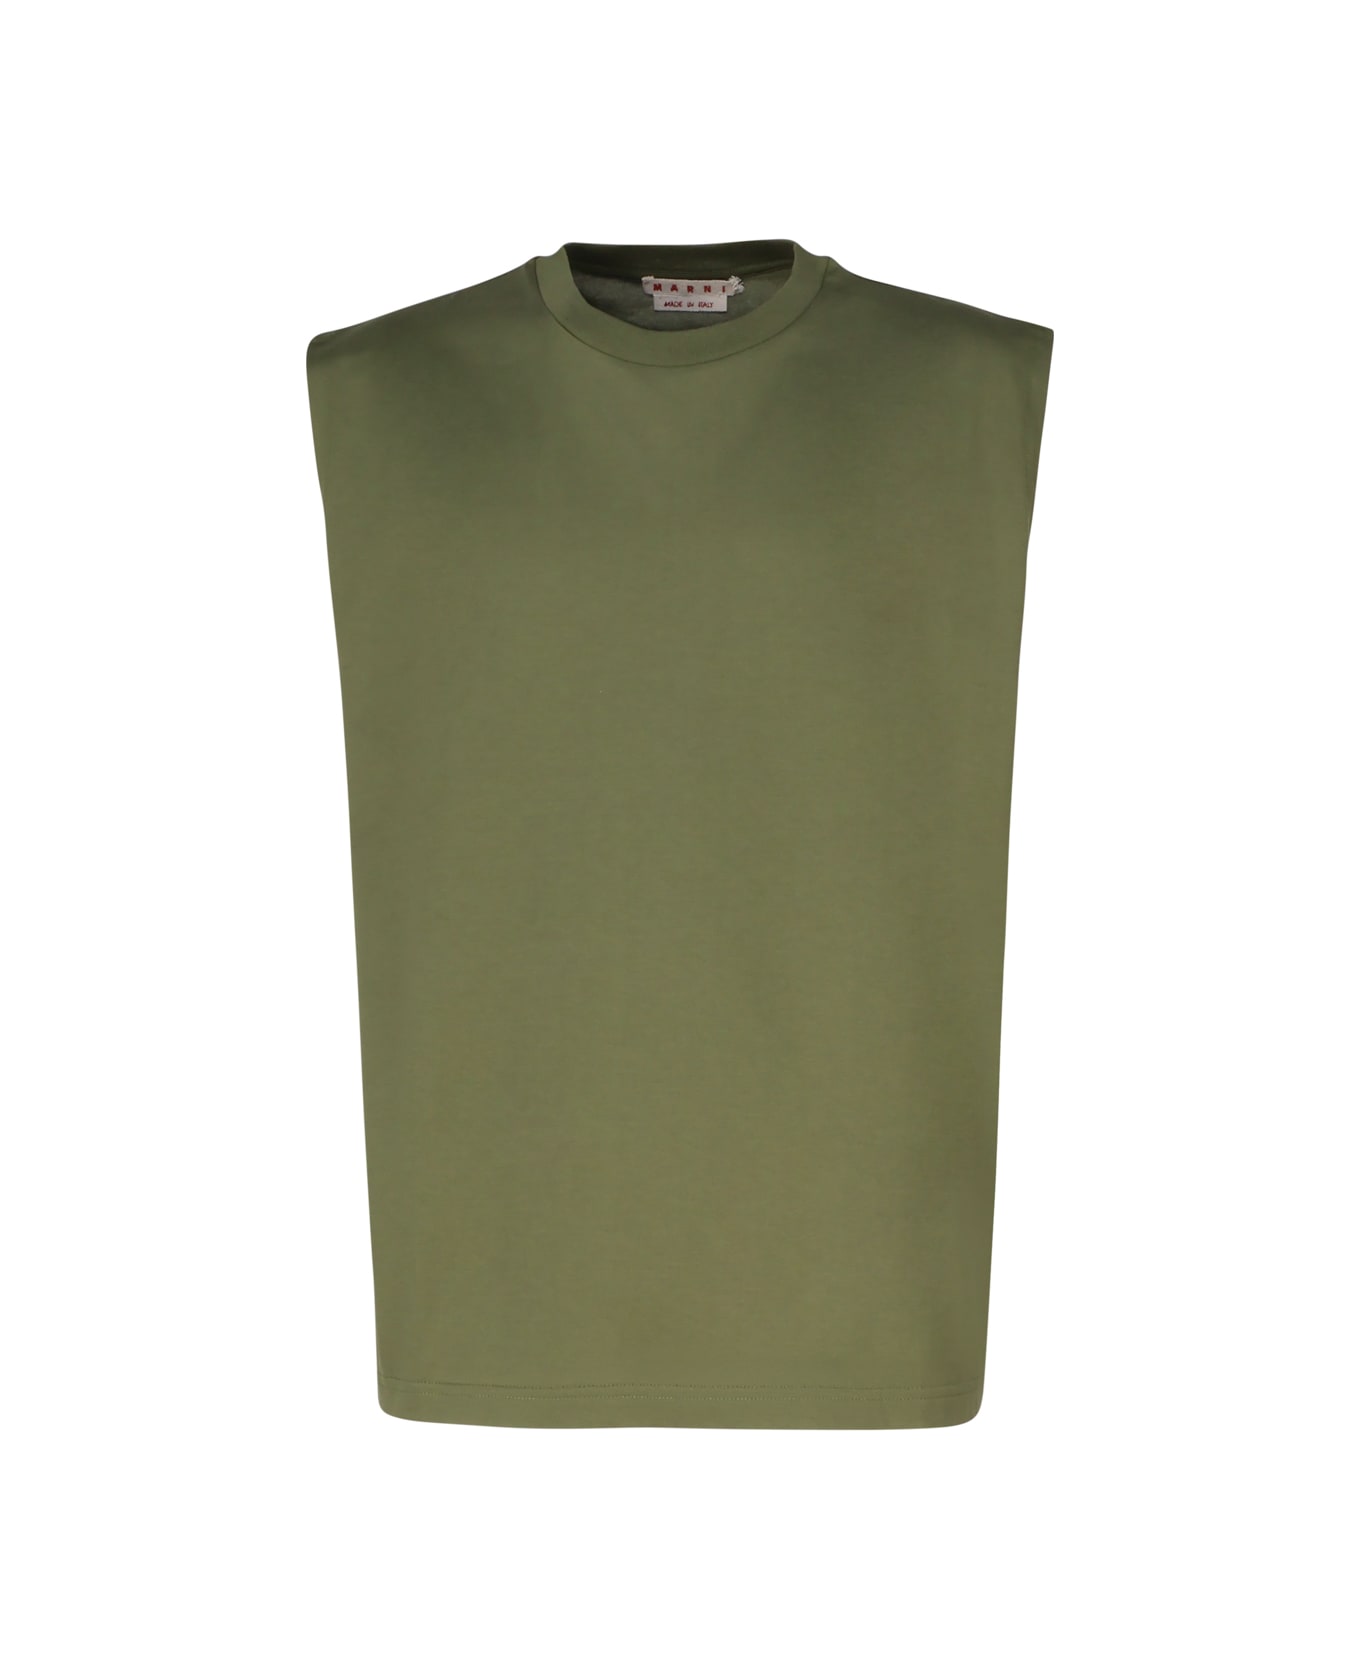 Marni Cotton Sleeveless T-shirt With Marni Dripping Print - Green